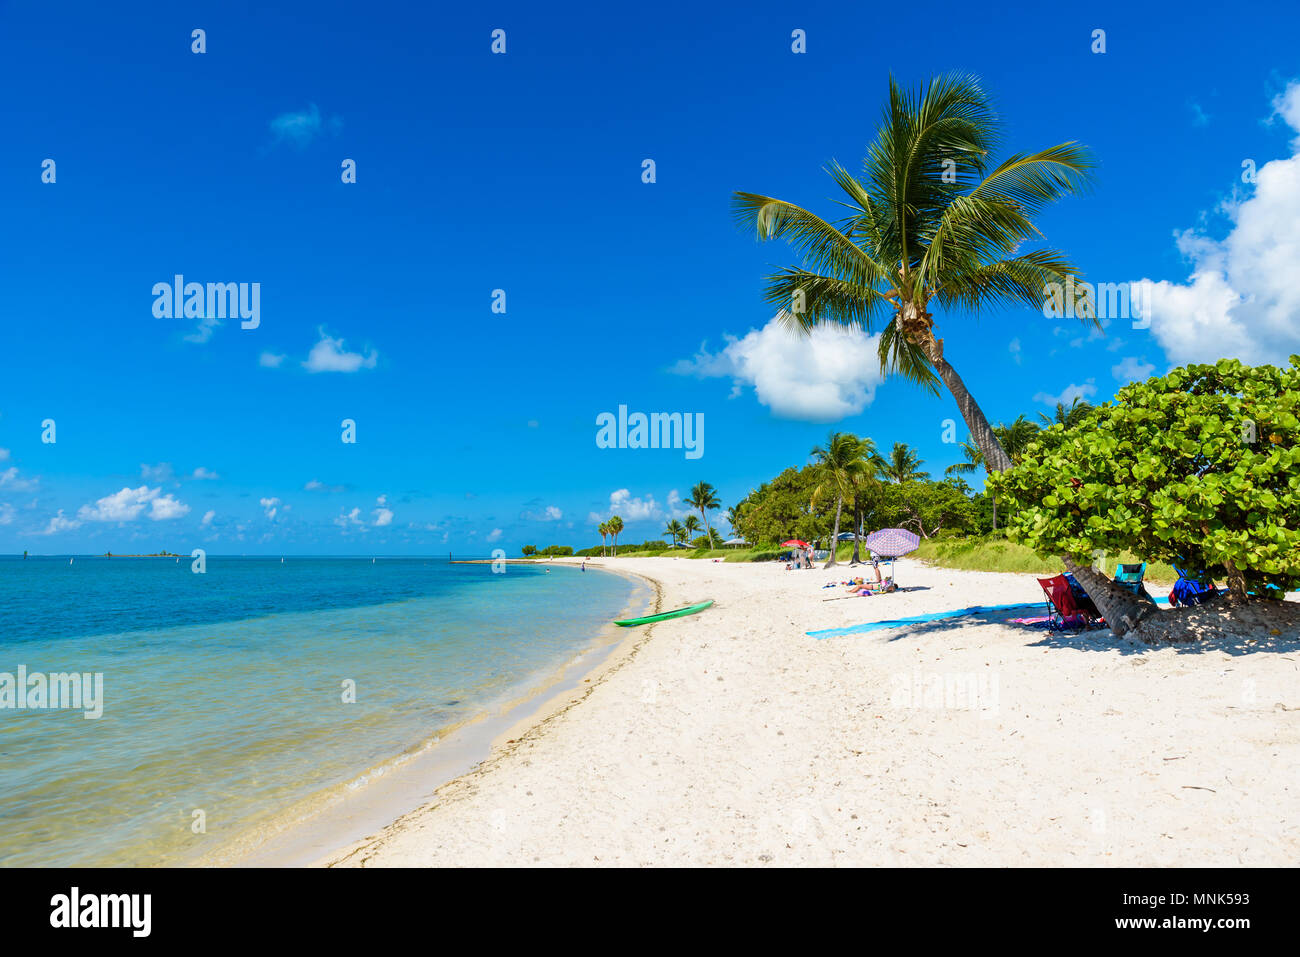 Sombrero Beach with palm trees on the Florida Keys, Marathon, Florida, USA. Tropical and paradise destination for vacation. Stock Photo